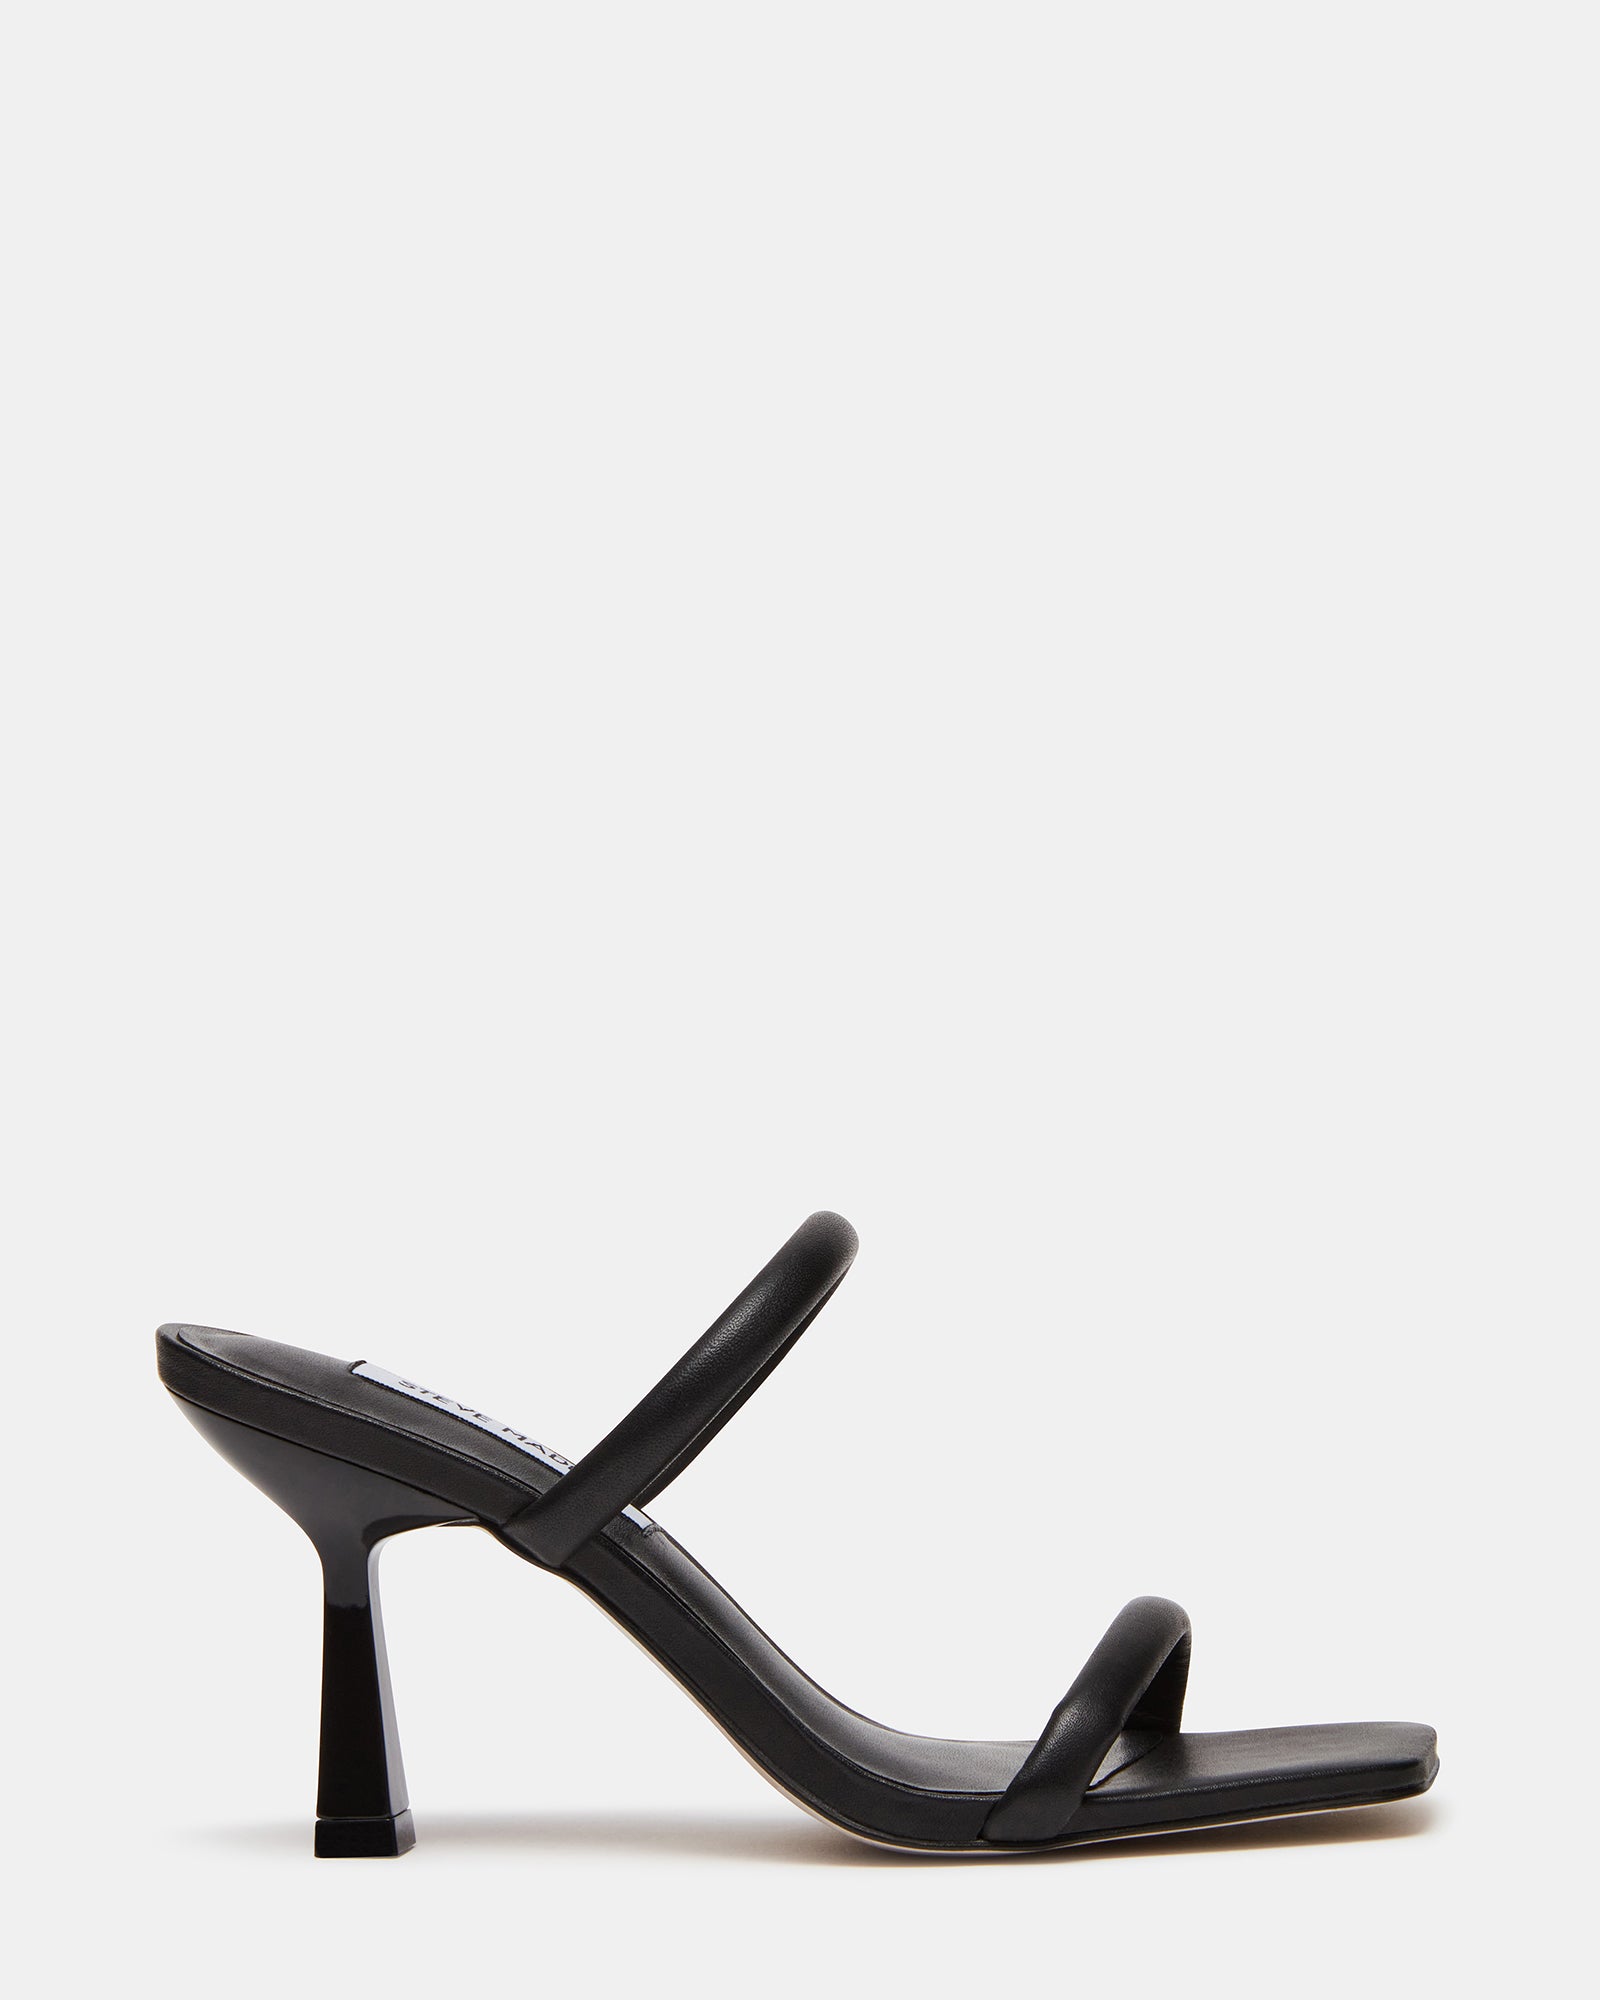 Loafers | Sandals, – Designer Mule Mules Flats, Women\'s Heels, Moretrends- mules Steve & Madden